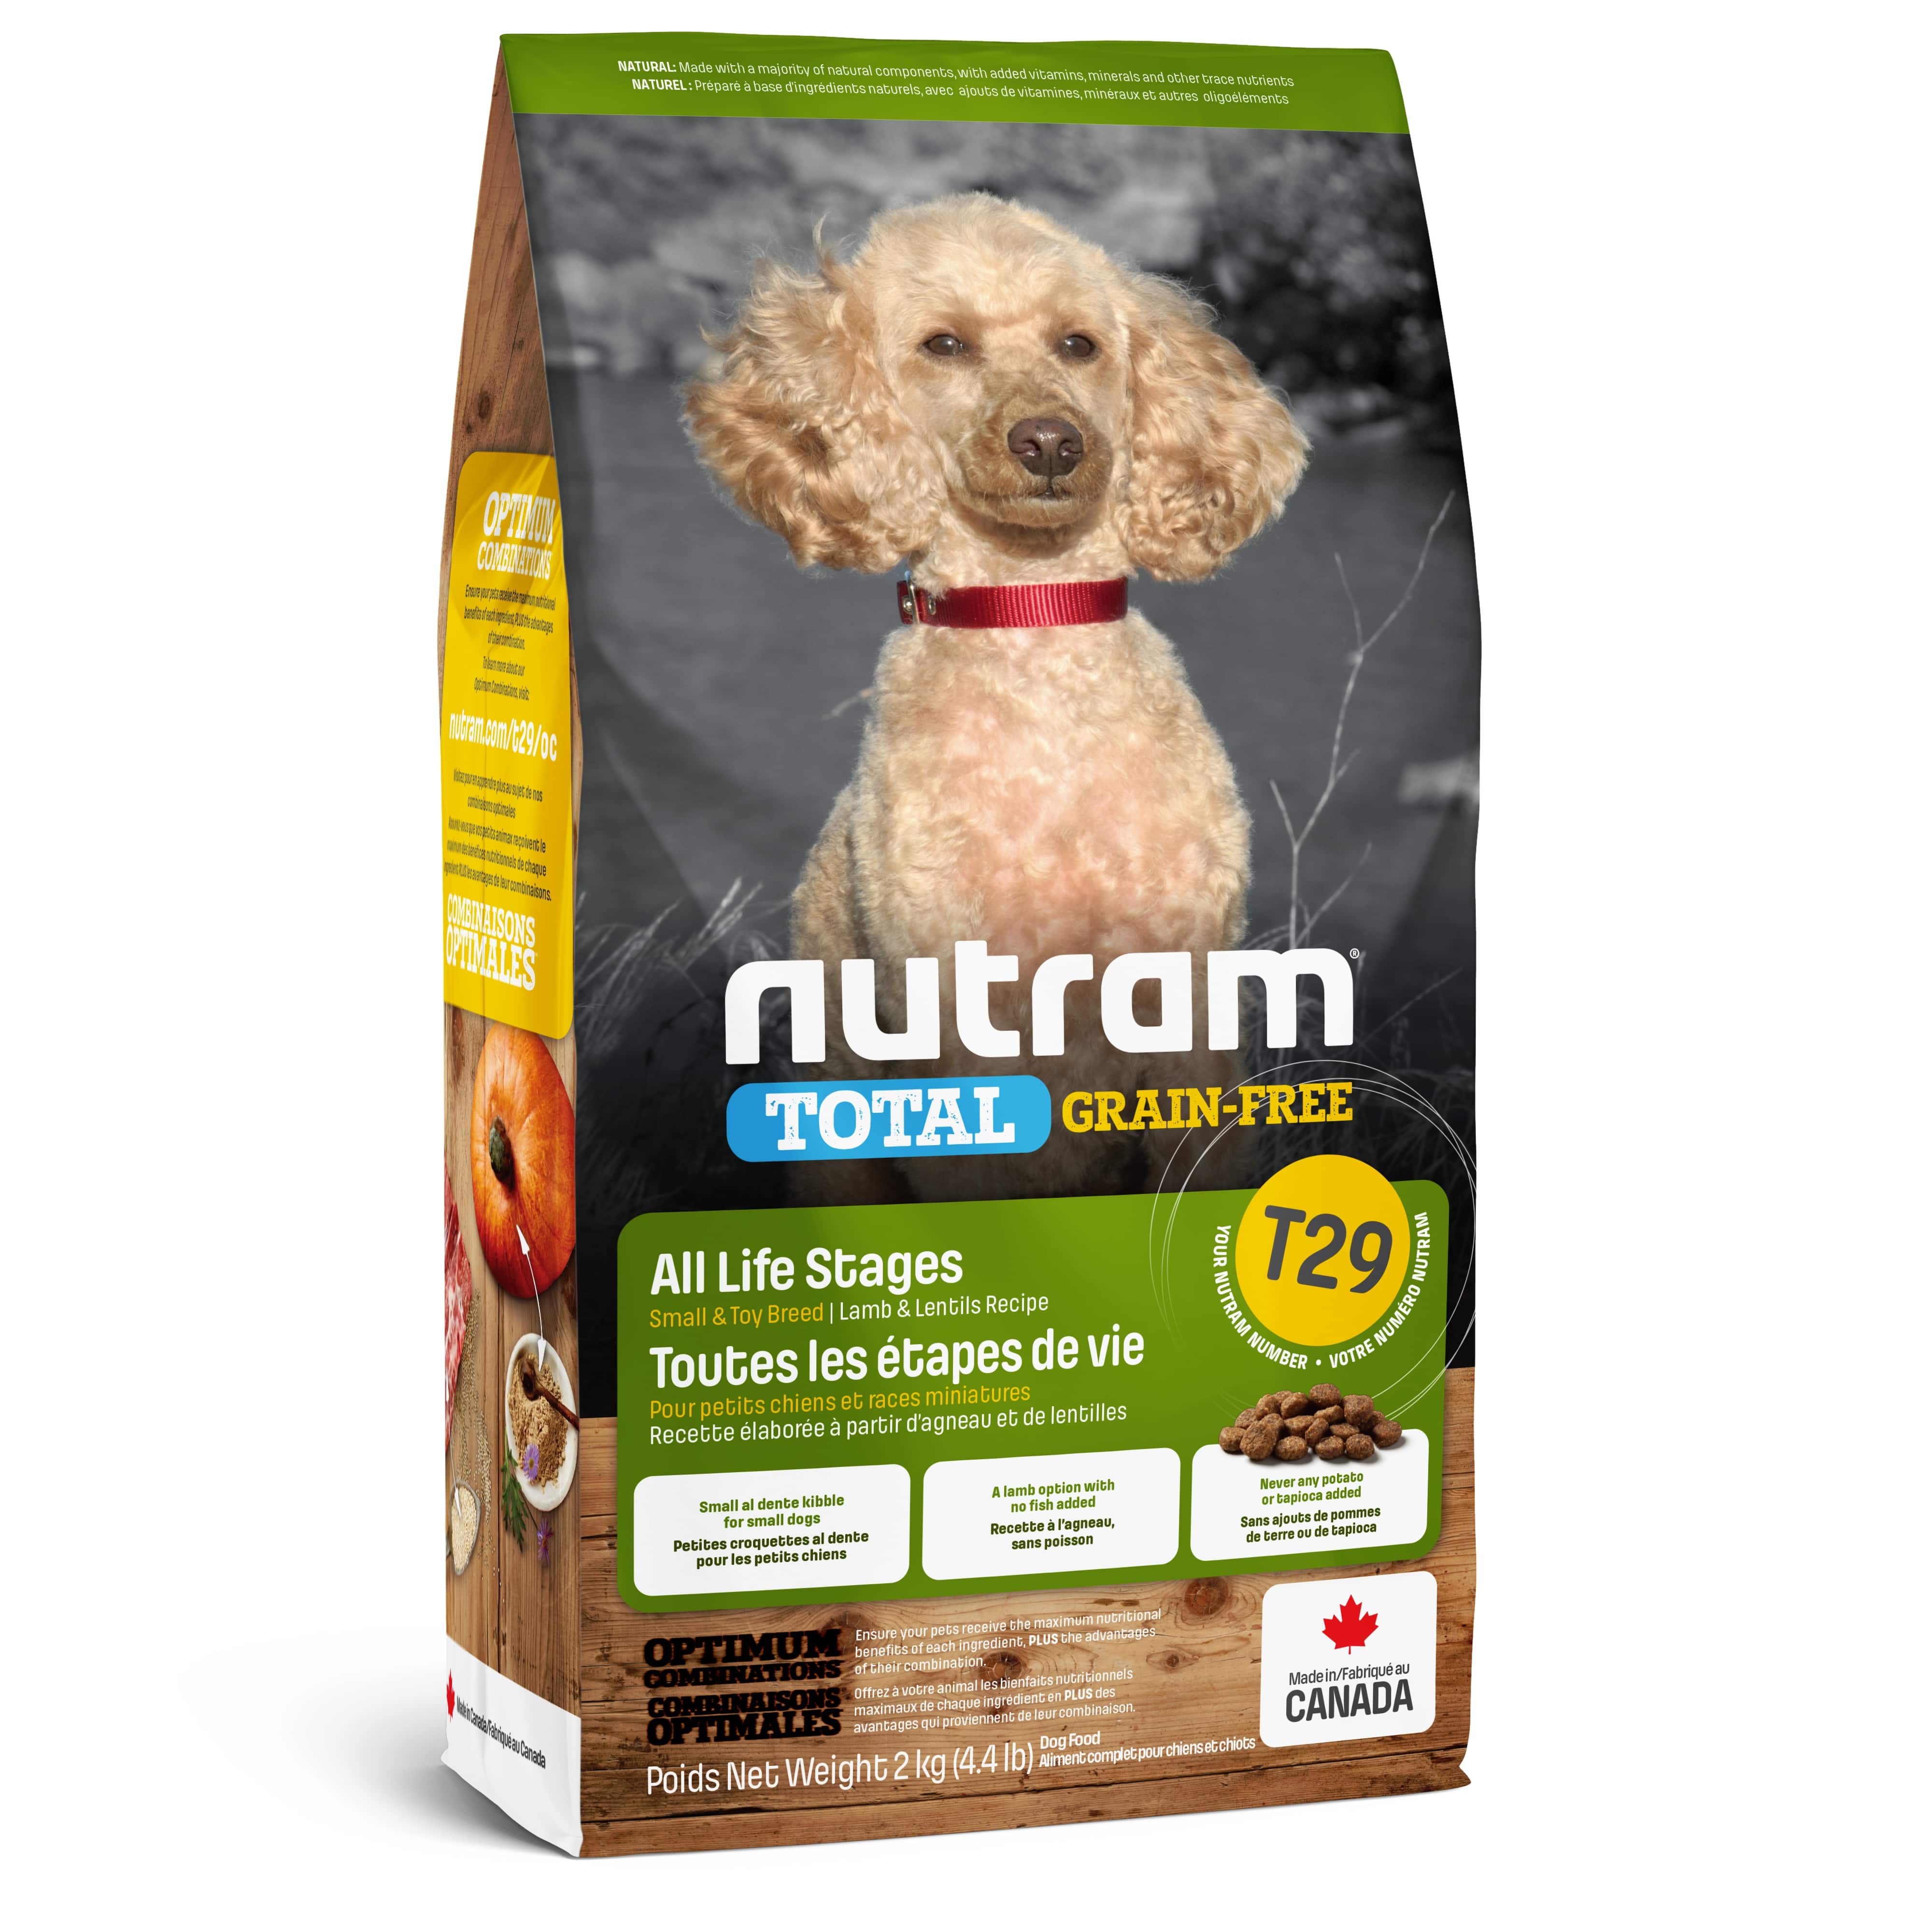 T29 Nutram Total Grain-Free® Lamb and Lentils Recipe Small Breed Dog Food